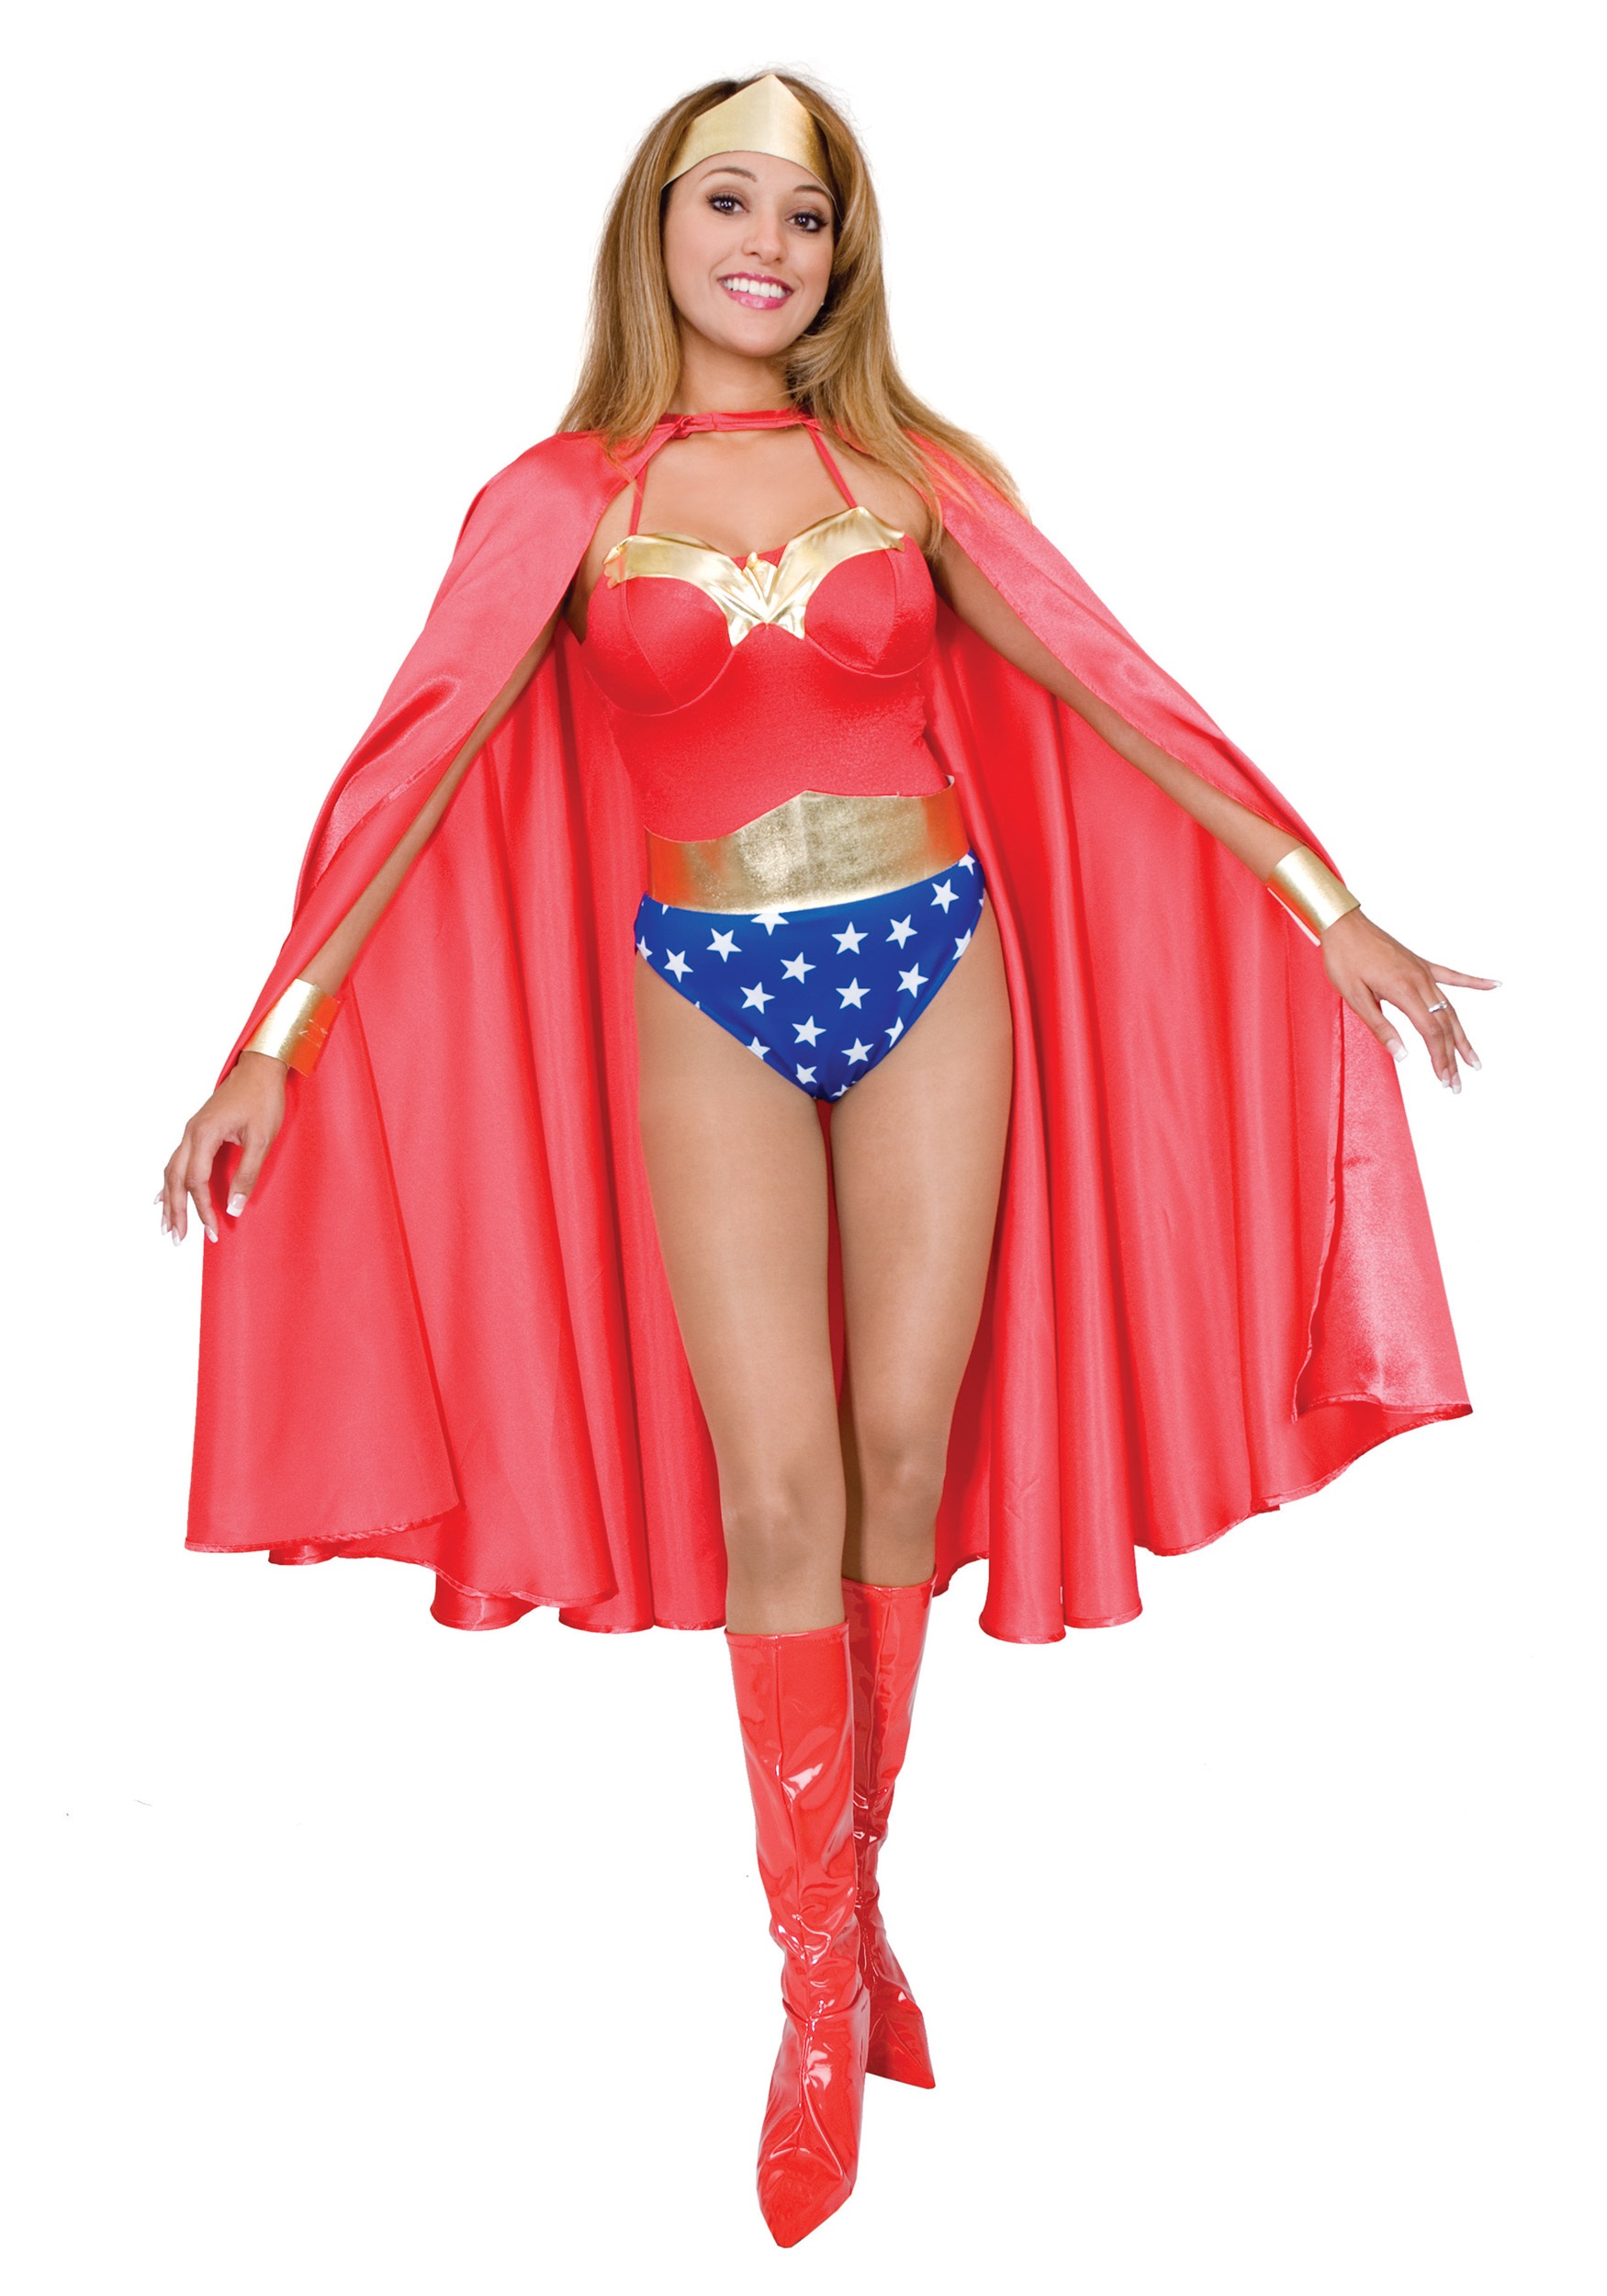 DUSTY PLANES Kids Superhero Cape/Costume 